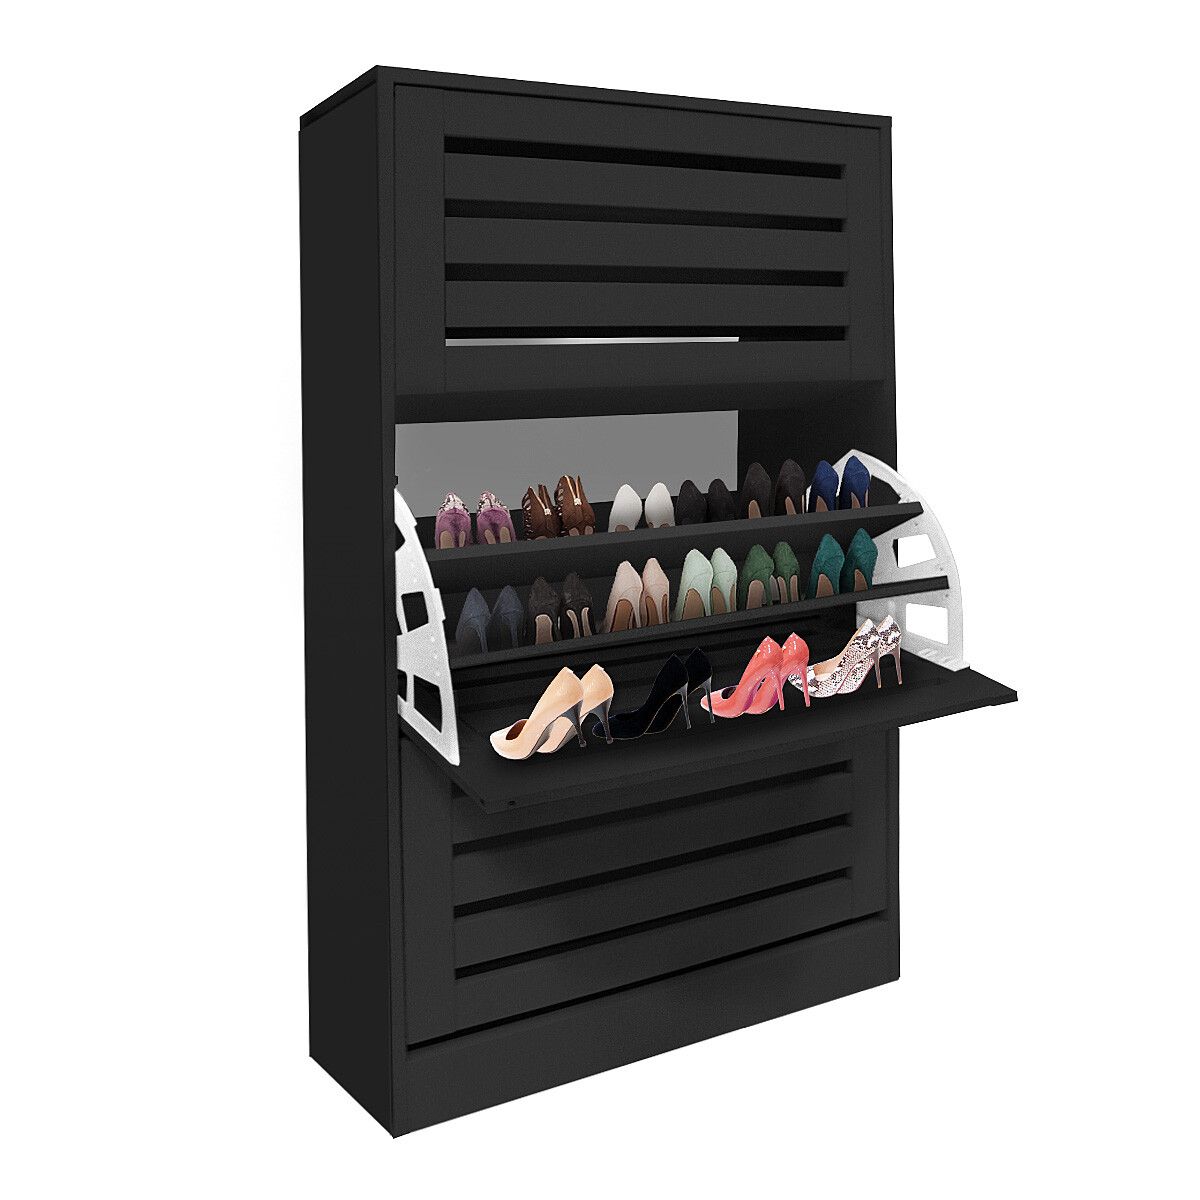 Black Wooden Shoe Cabinet Rack Shelf Organiser w/3 Drawers 45 Pairs Shoes Storage 